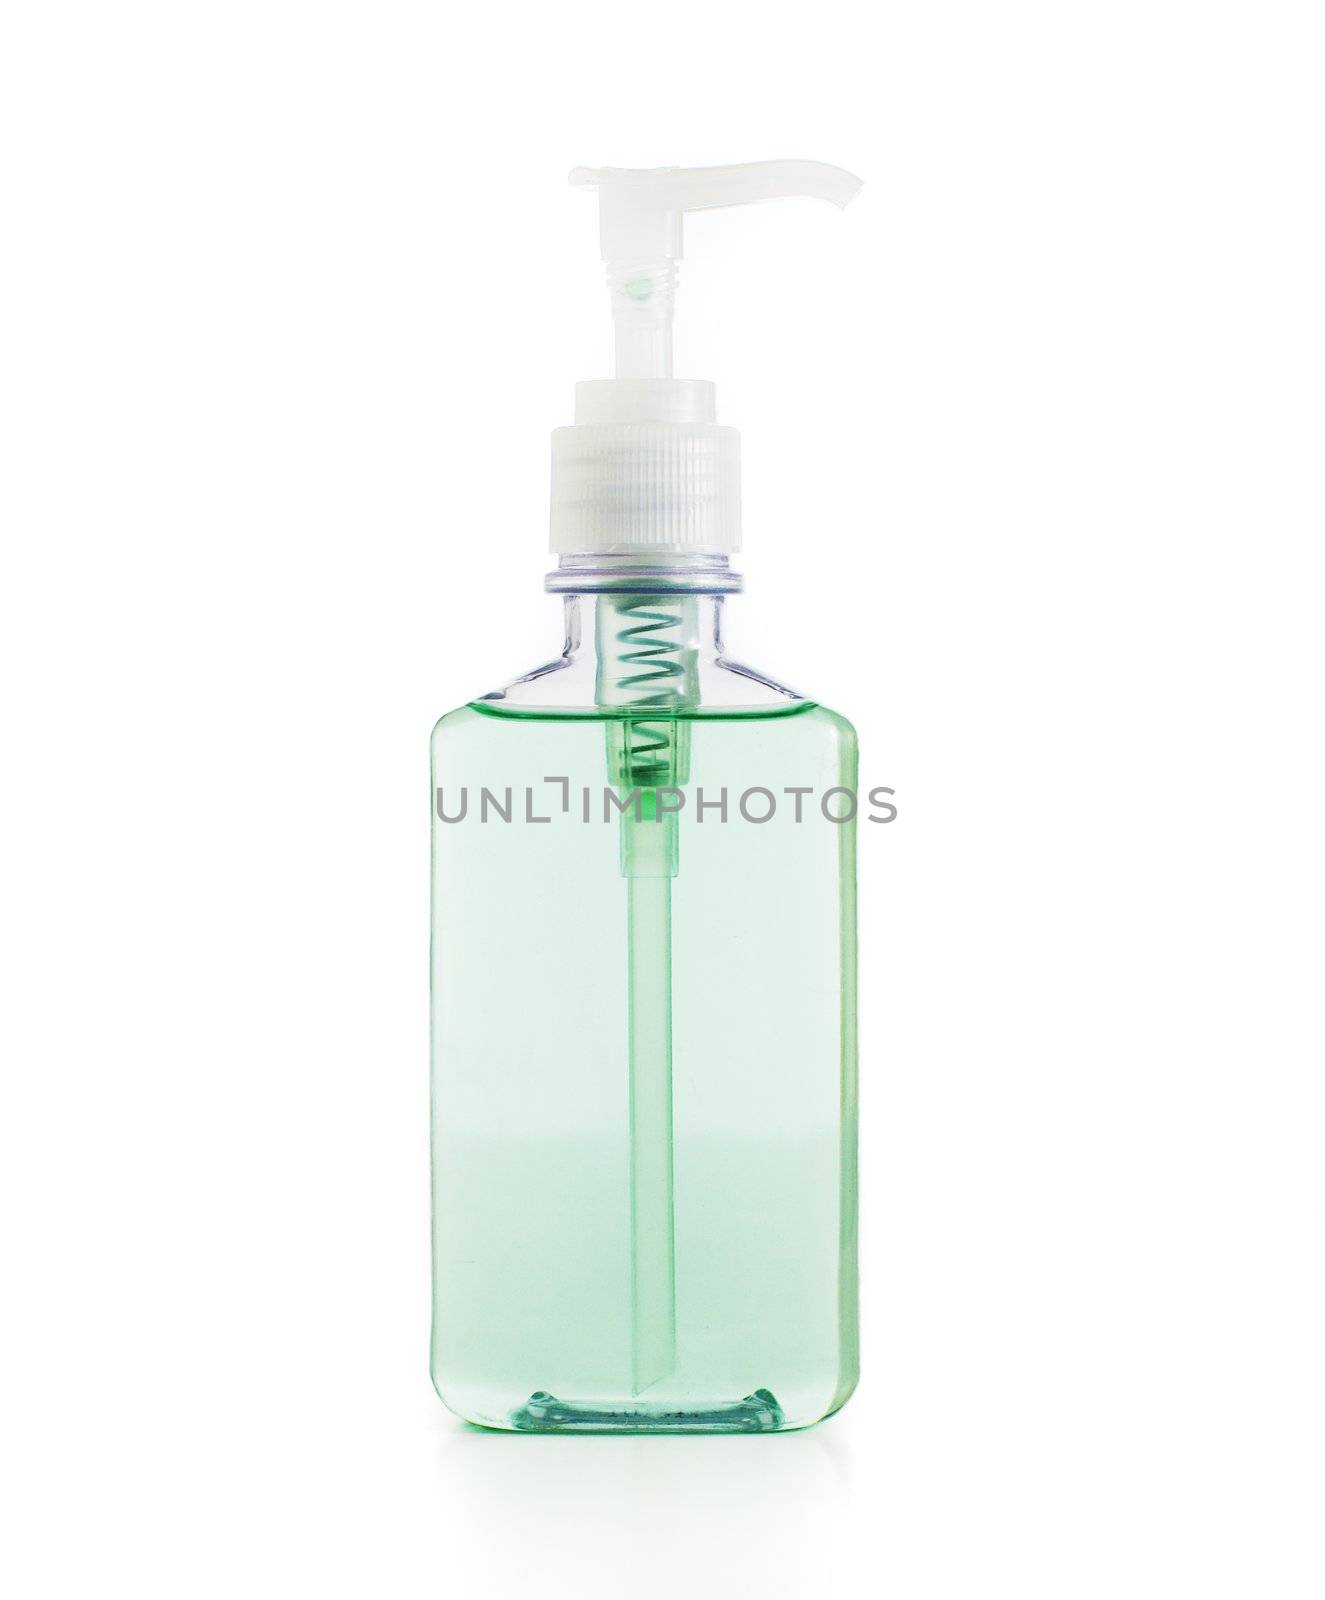 Soap / lotion / shampoo against white by cardmaverick